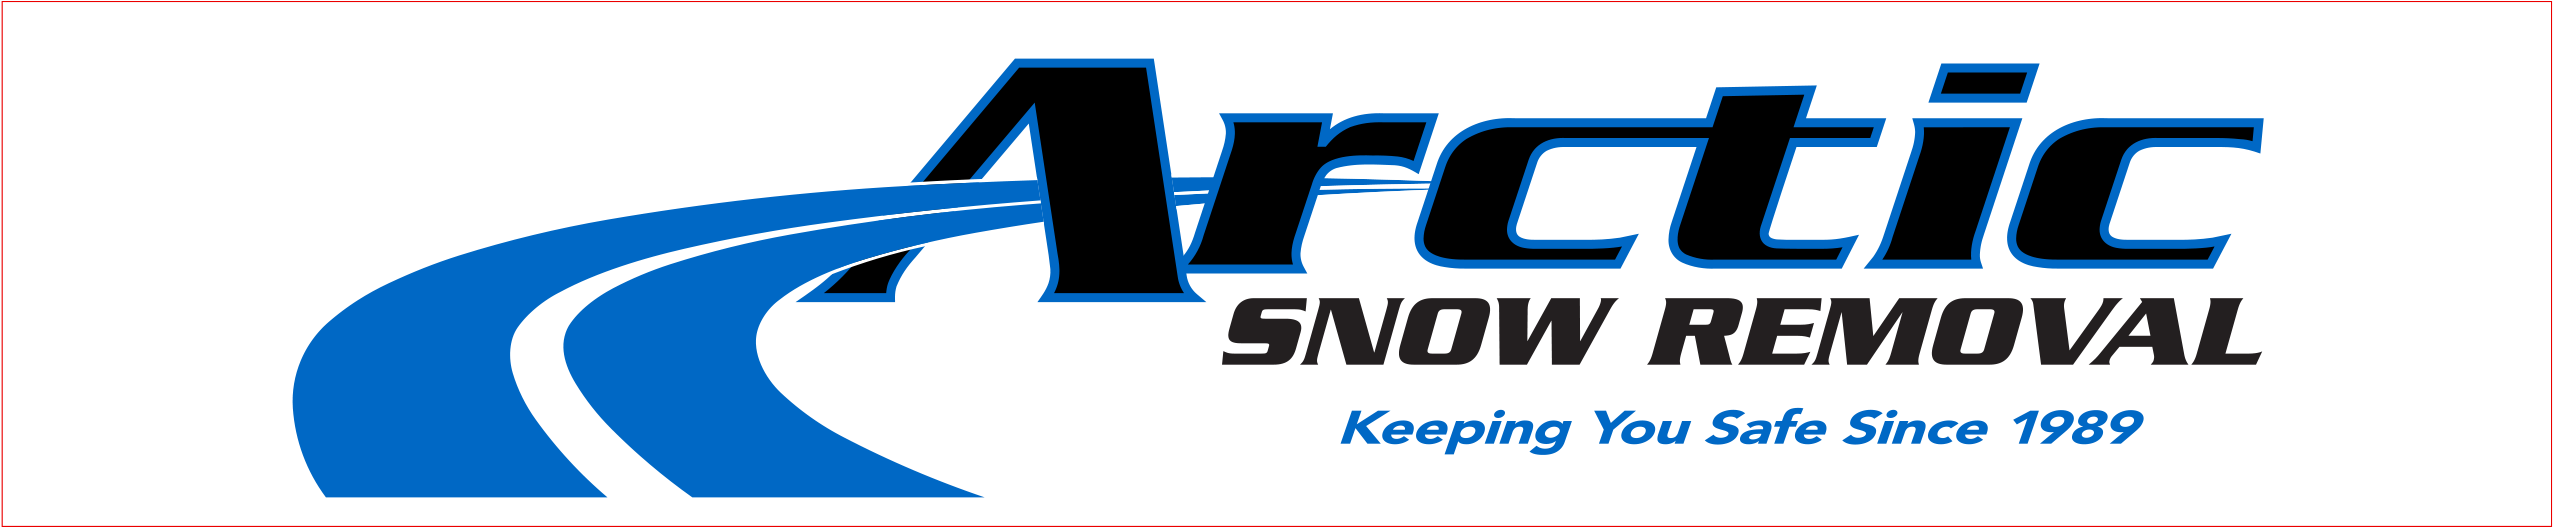 Arctic Snow Removal And Salting Service Ltd (2613x606)